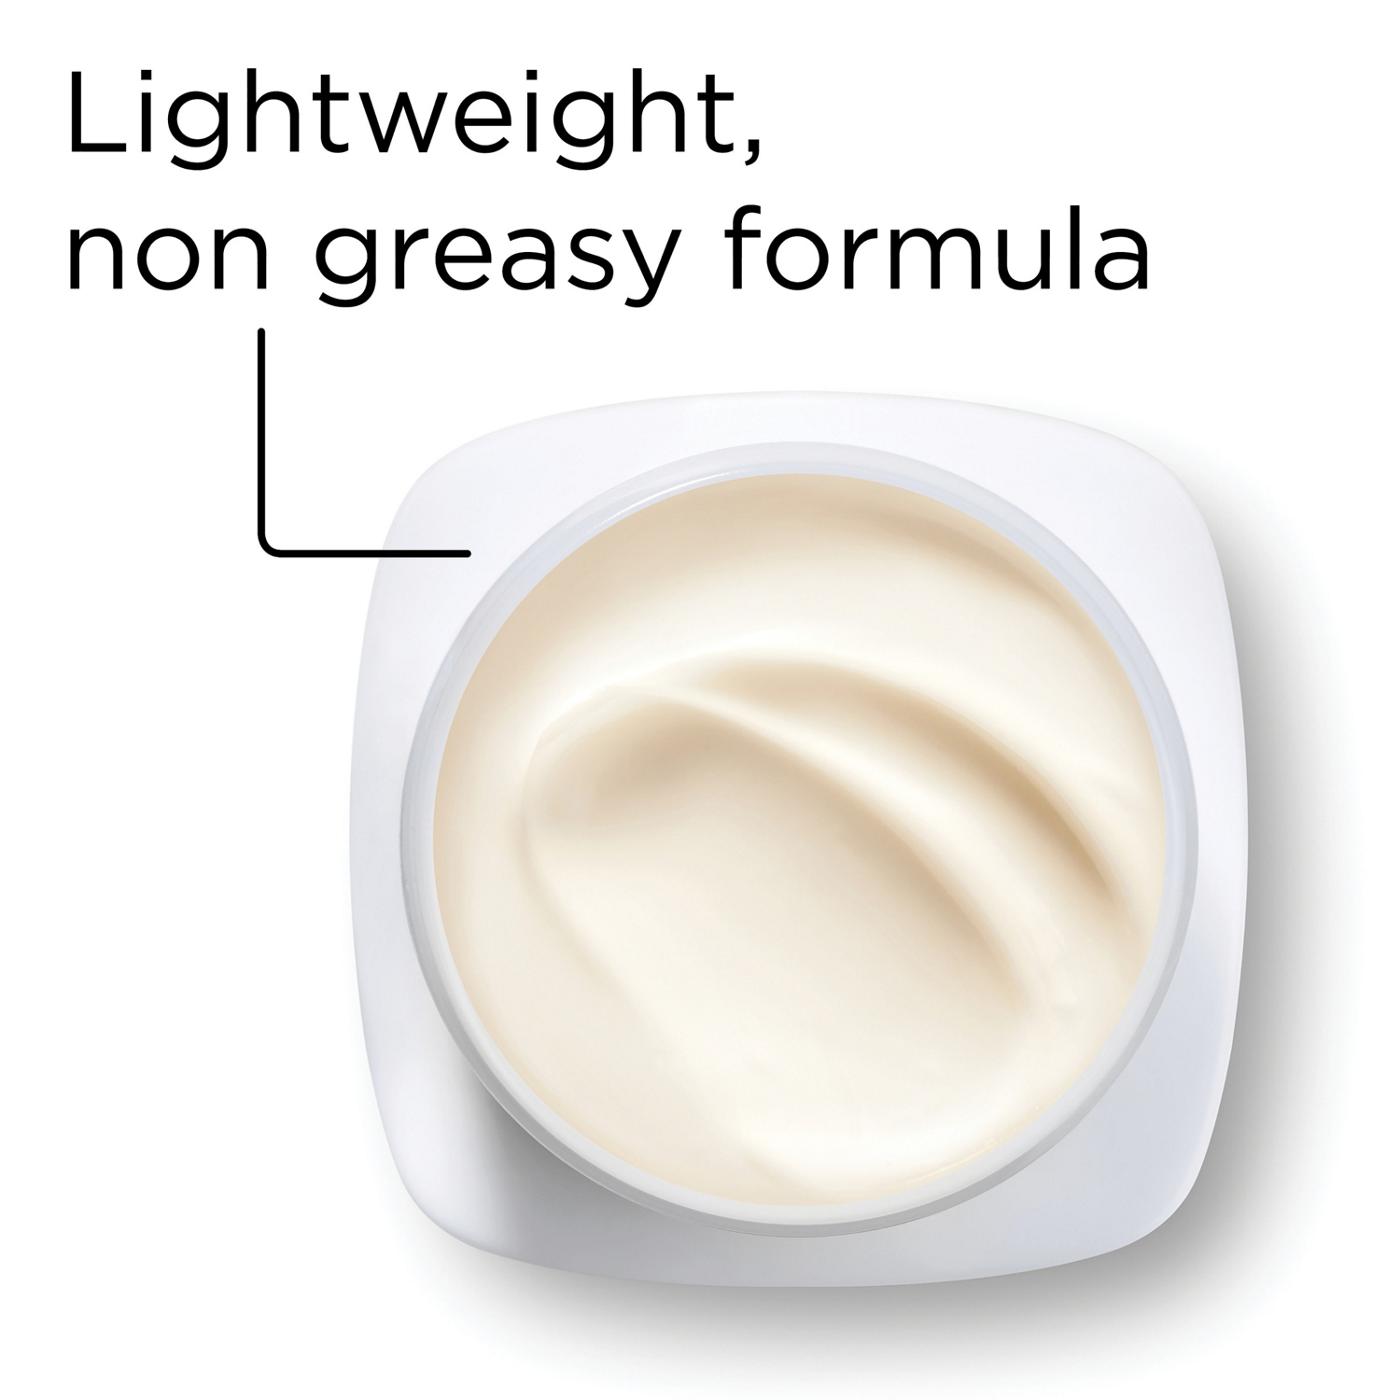 L'Oréal Paris Revitalift Anti-Aging Face and Neck Cream Fragrance Free; image 6 of 8